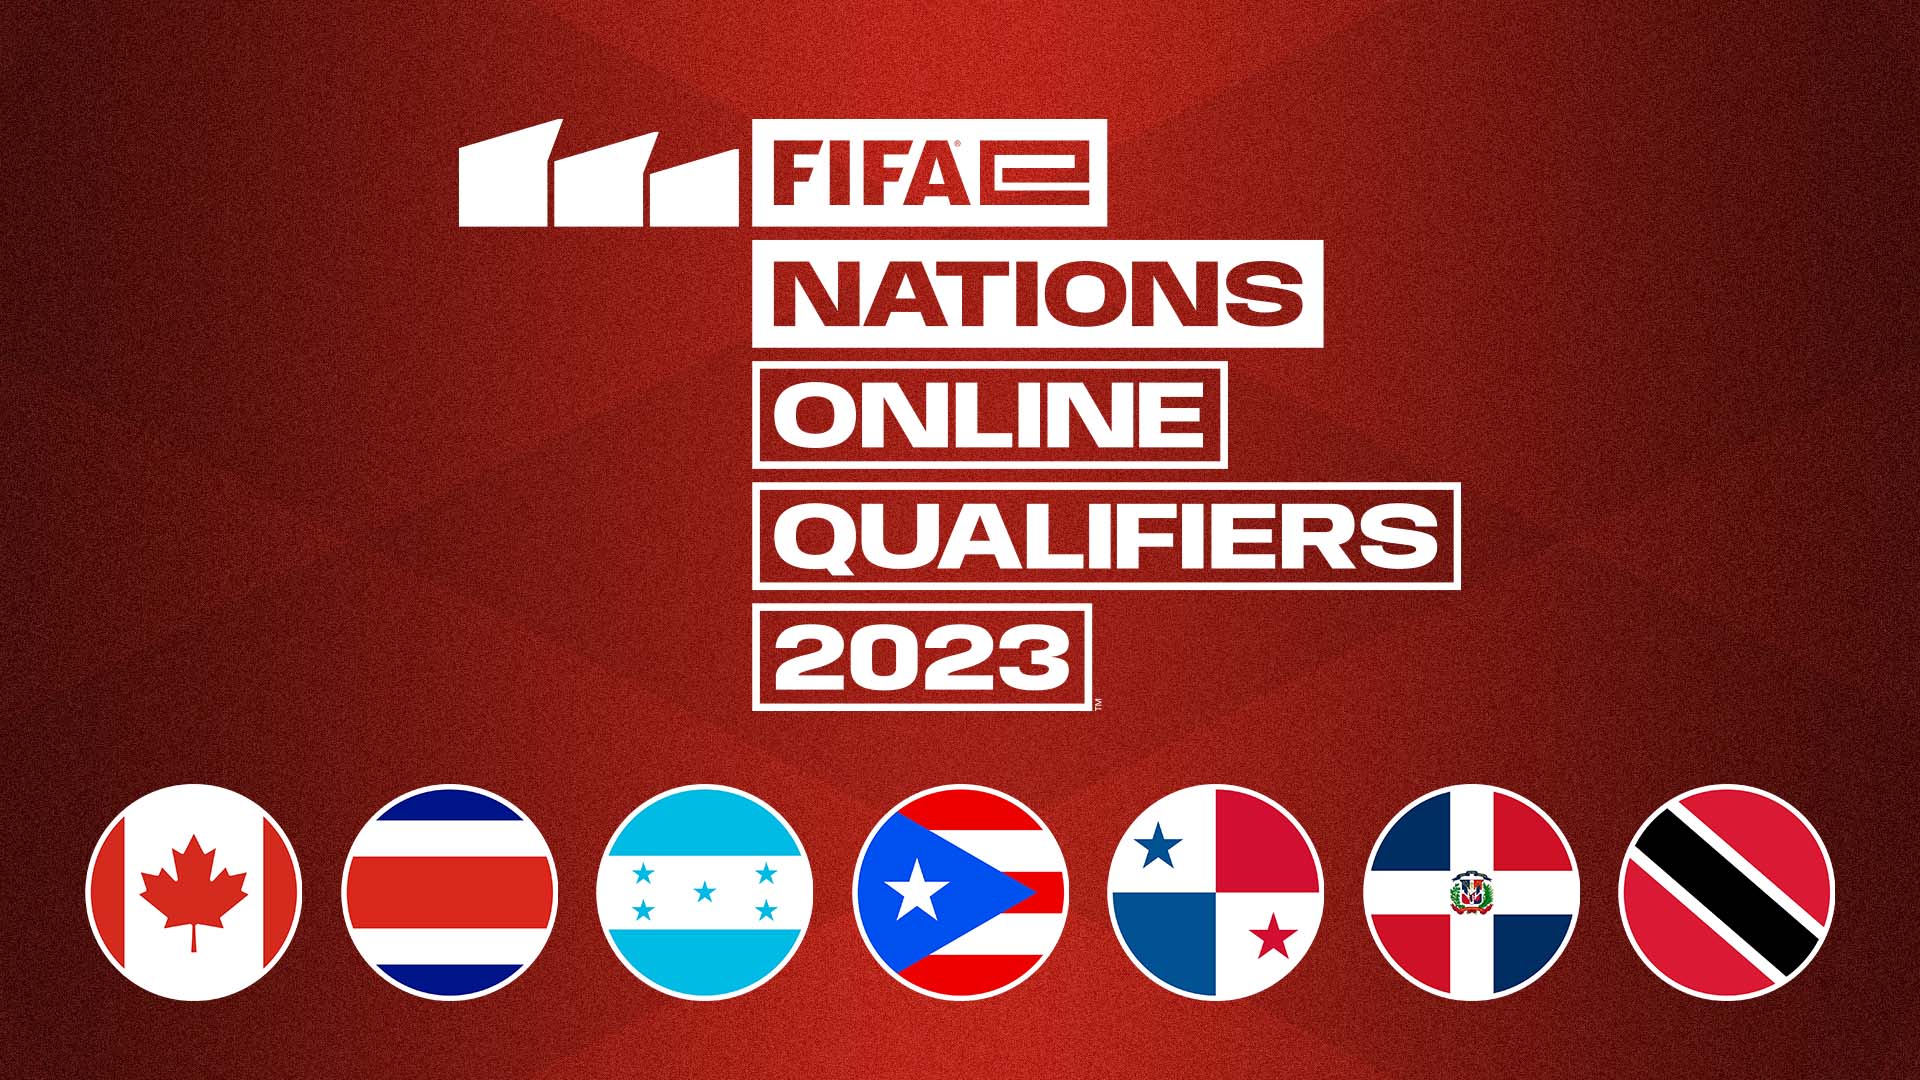 Canada Soccers eNational Team kicks off FIFAe Nations Online Qualifying